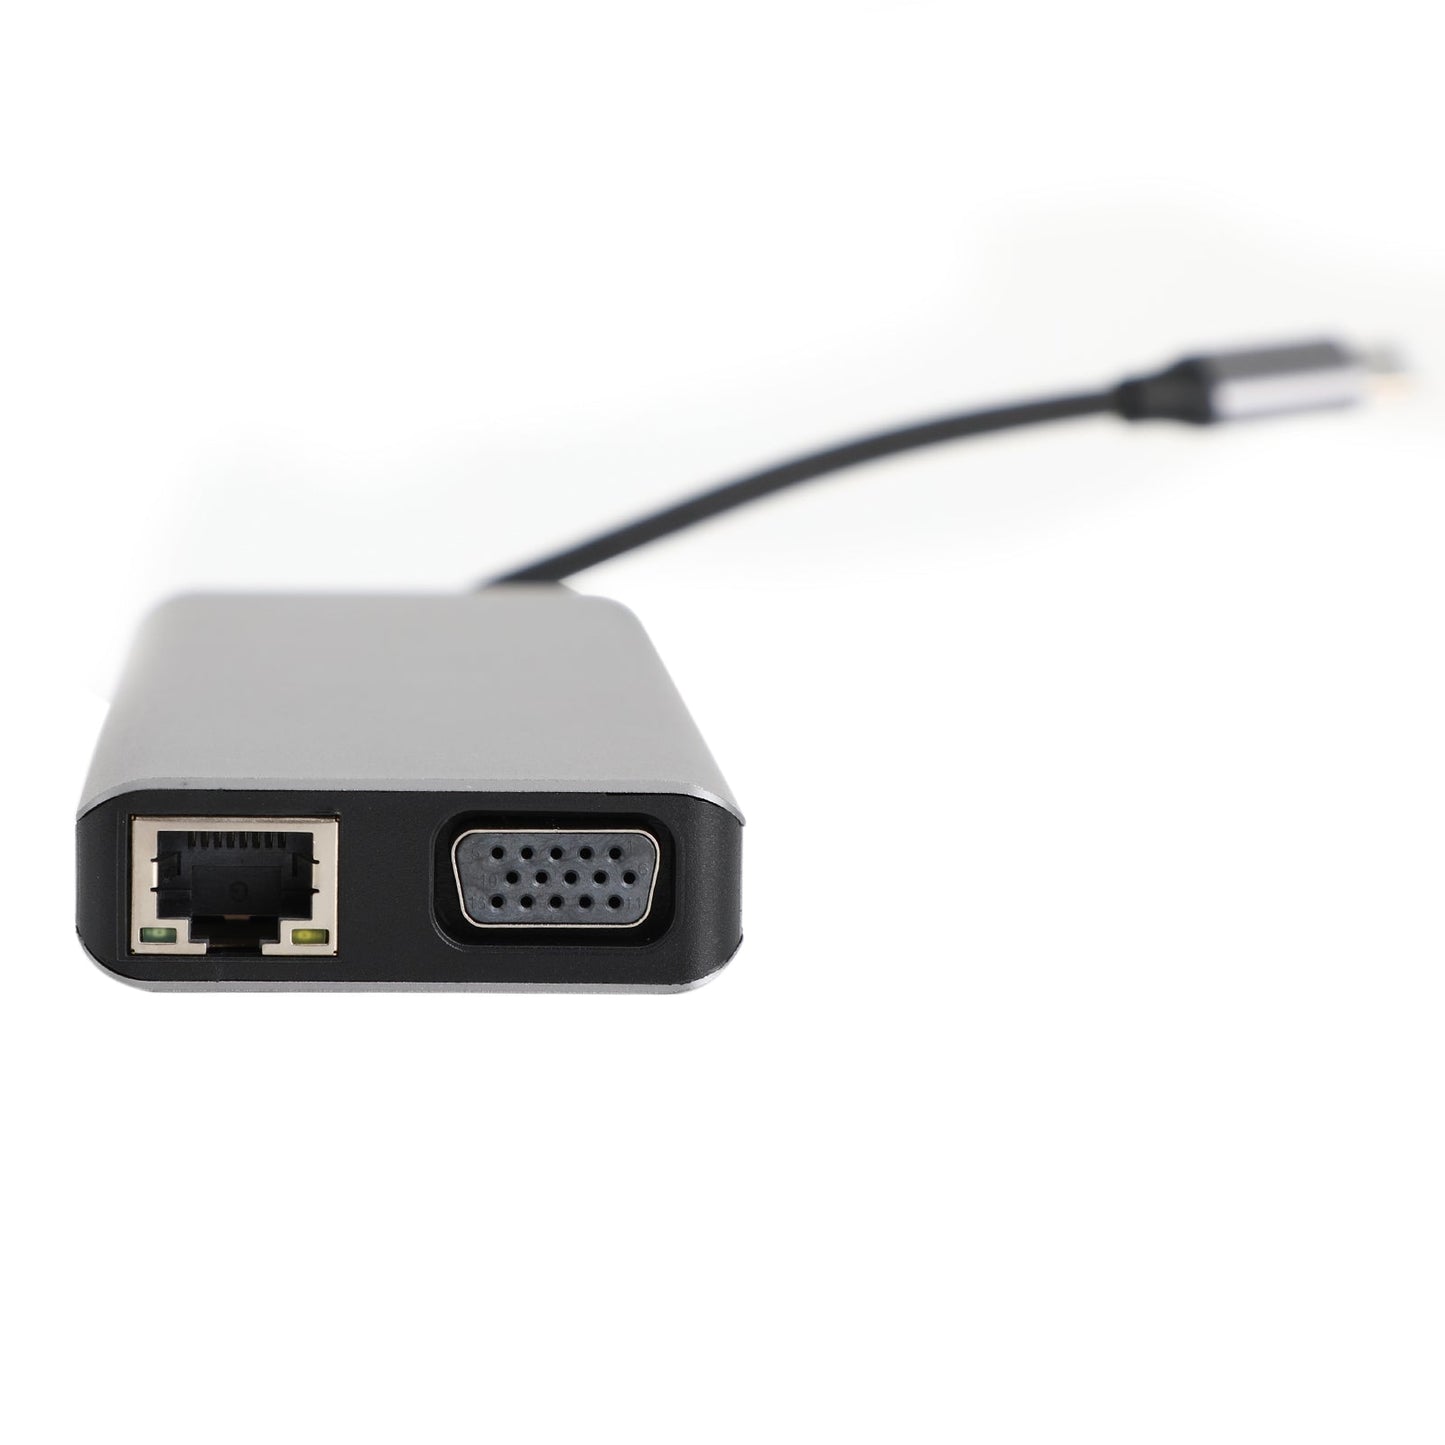 12 in 1 Type-C Hub Adapter Dock USB 3.0 Card Reader 4K HD 3.5mm TF for Macbook